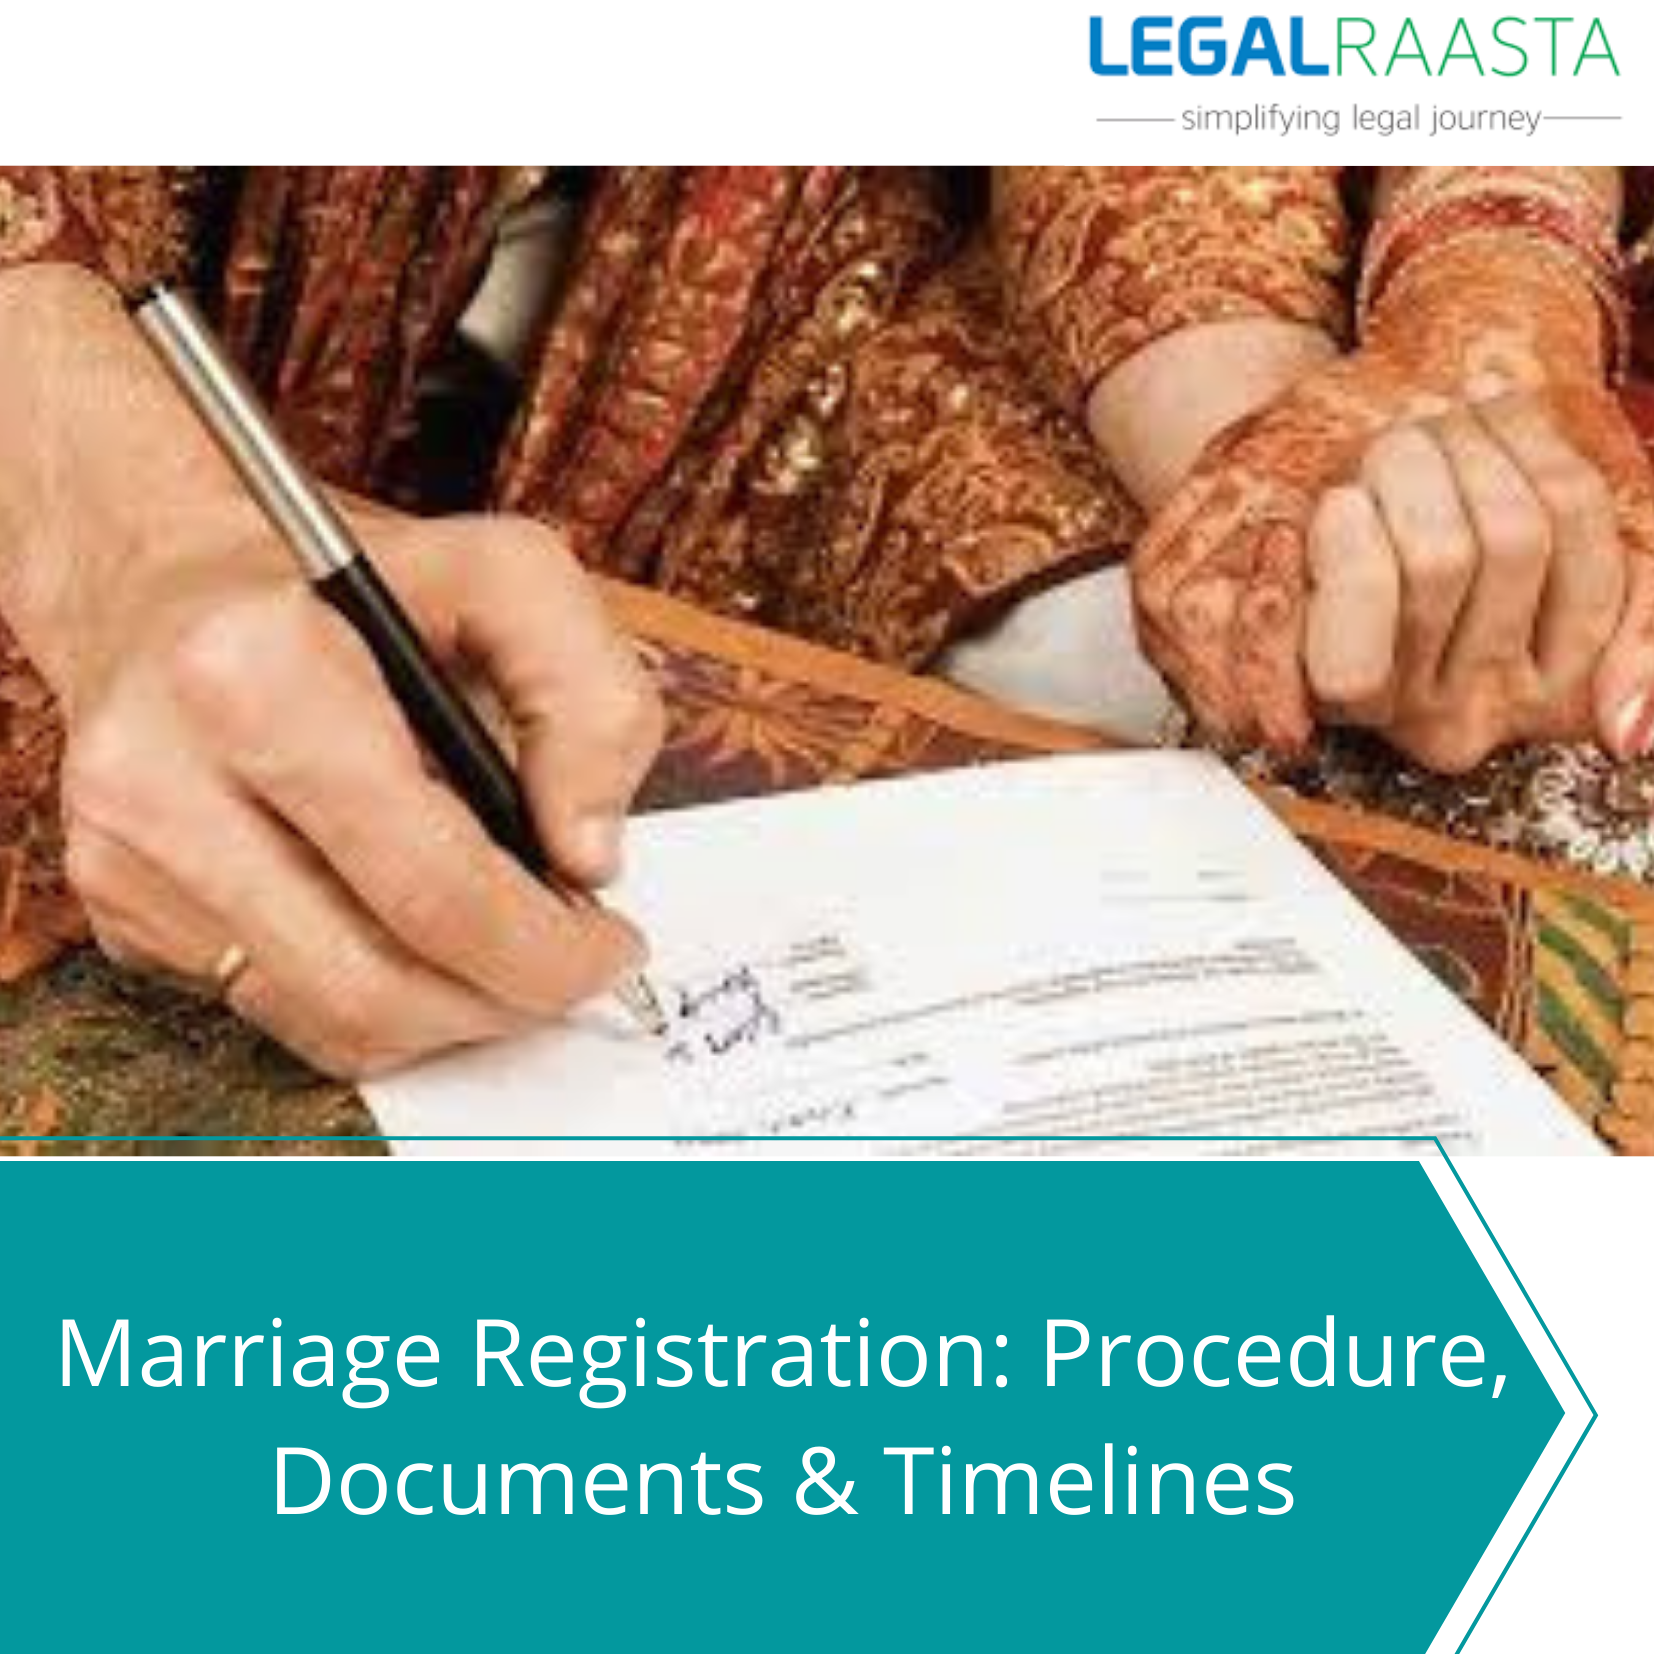 Marriage Registration: Procedure, Documents & Timelines